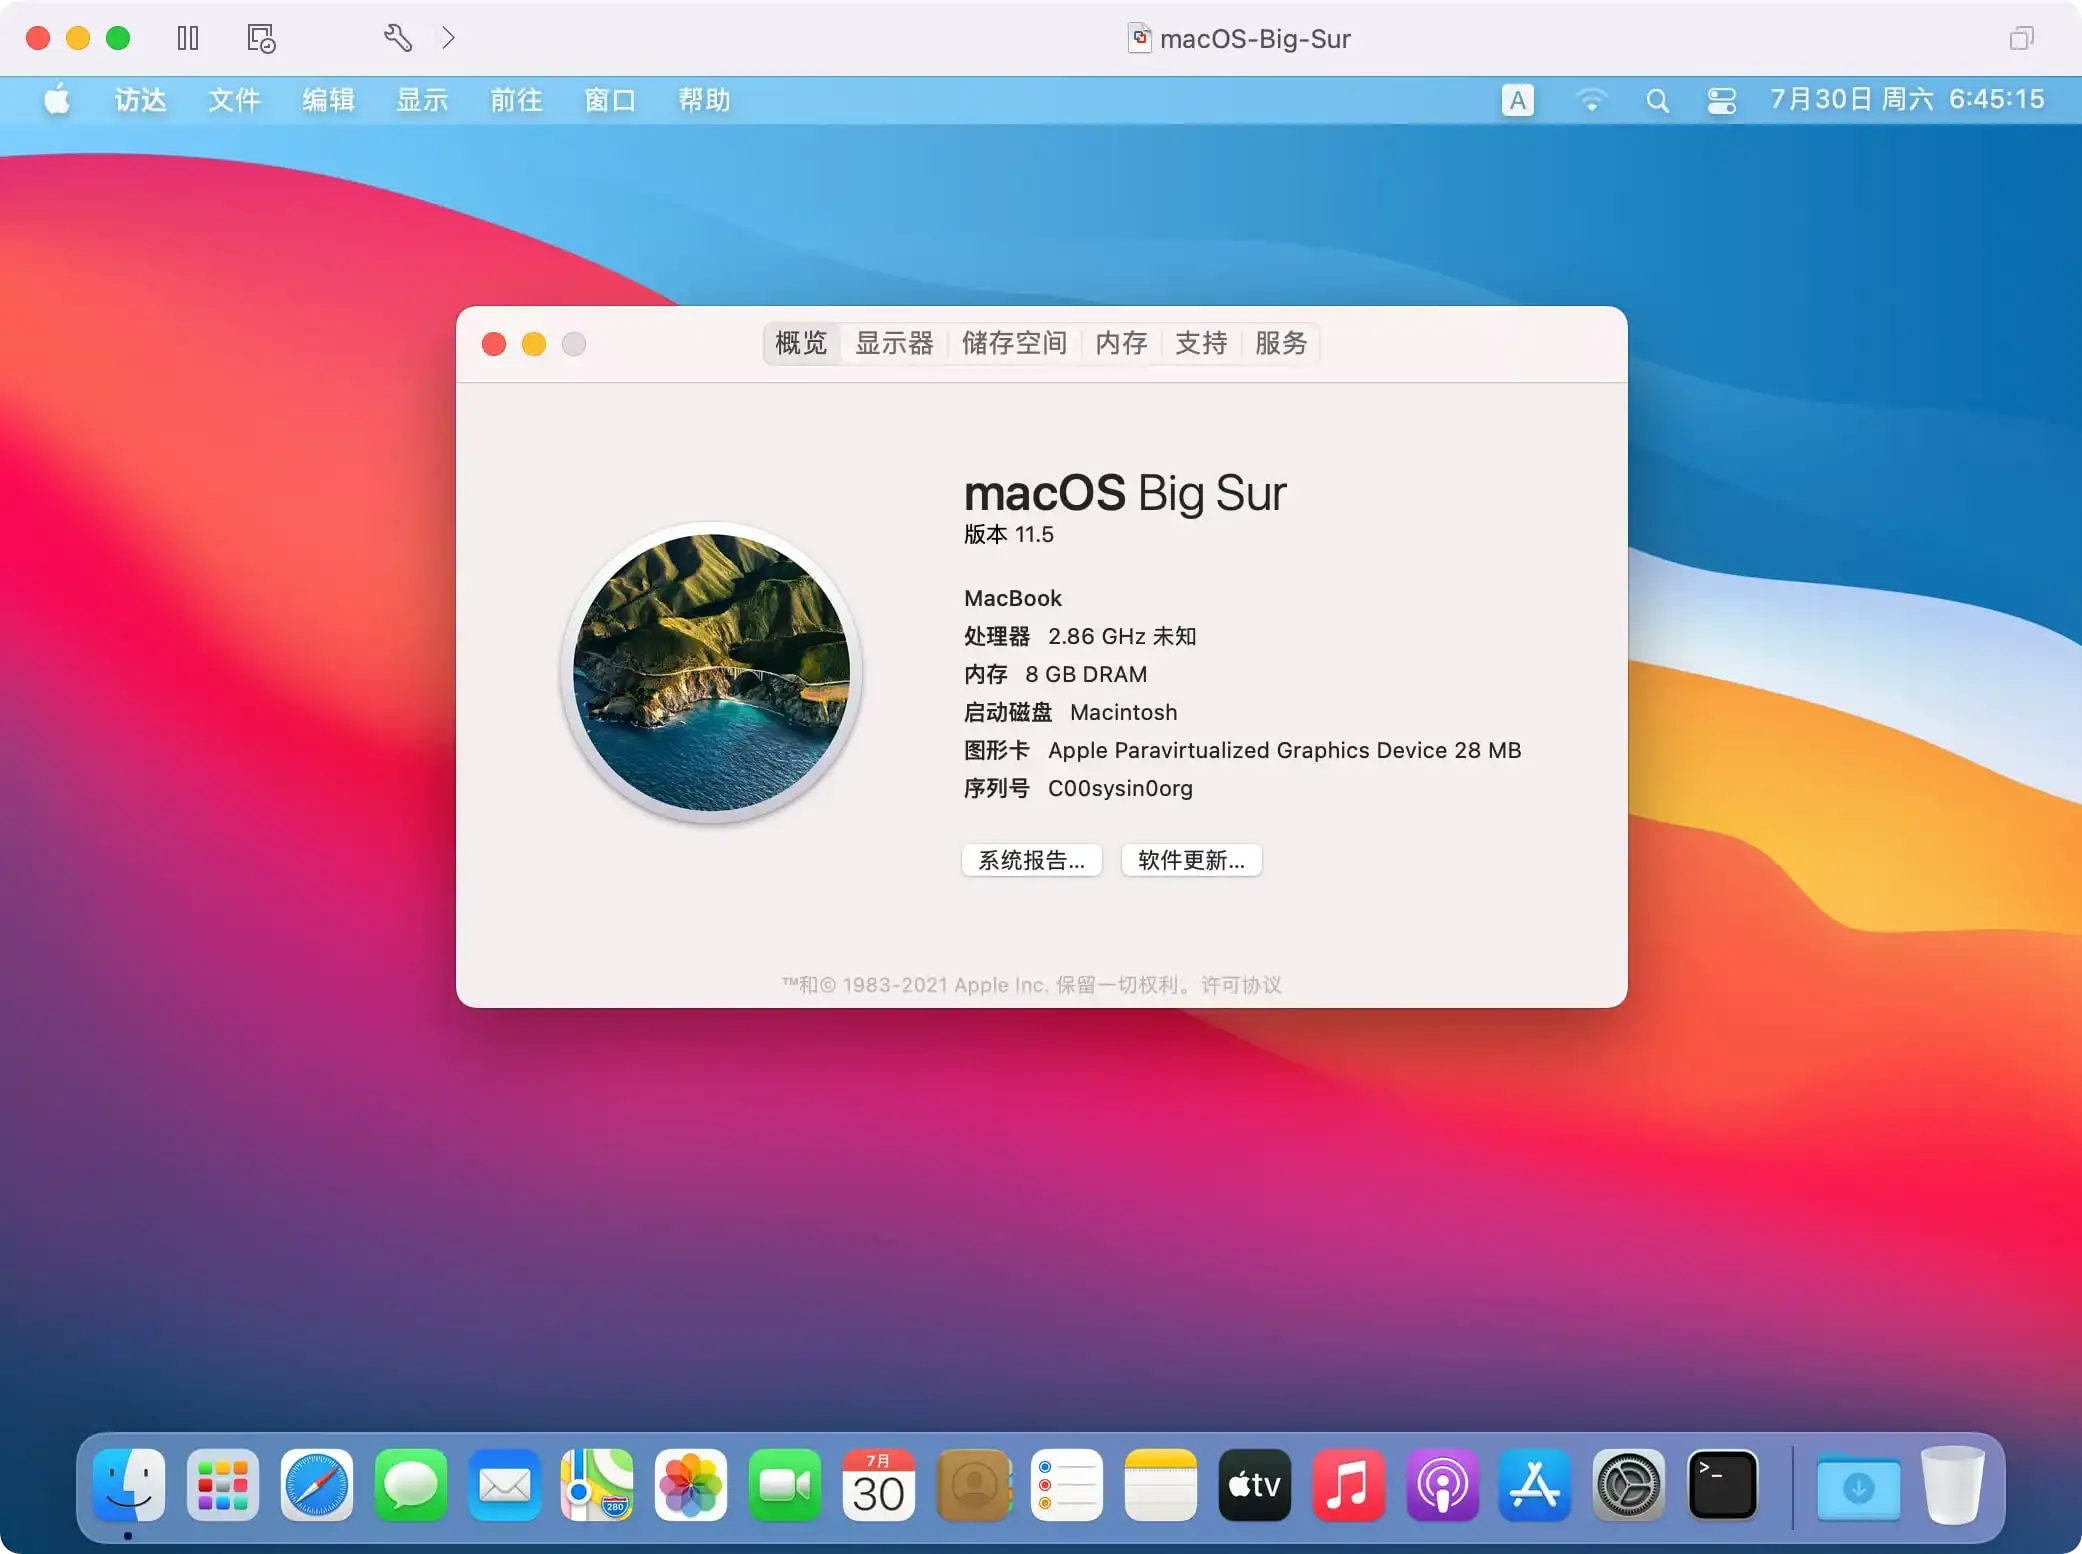 macOS Big Sur 运行在 VMware Fusion 中并启用了 Metal GPU 加速